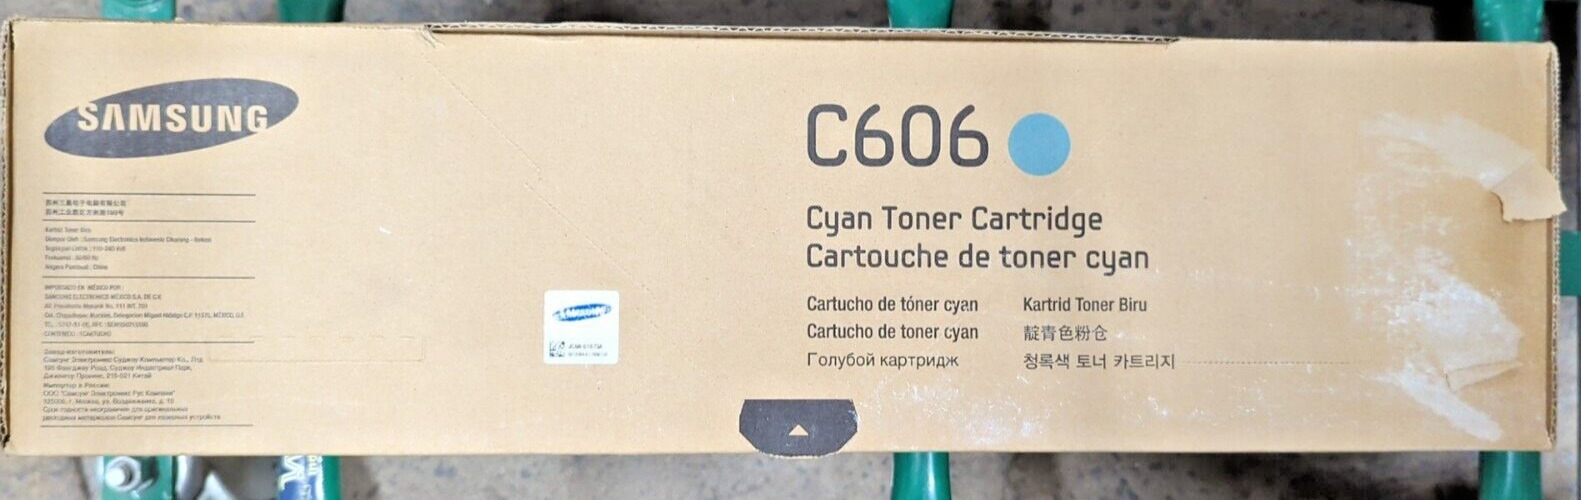 NEW Genuine Samsung CLT-C606S CYAN Toner Cartridge SS535A Unopened Box